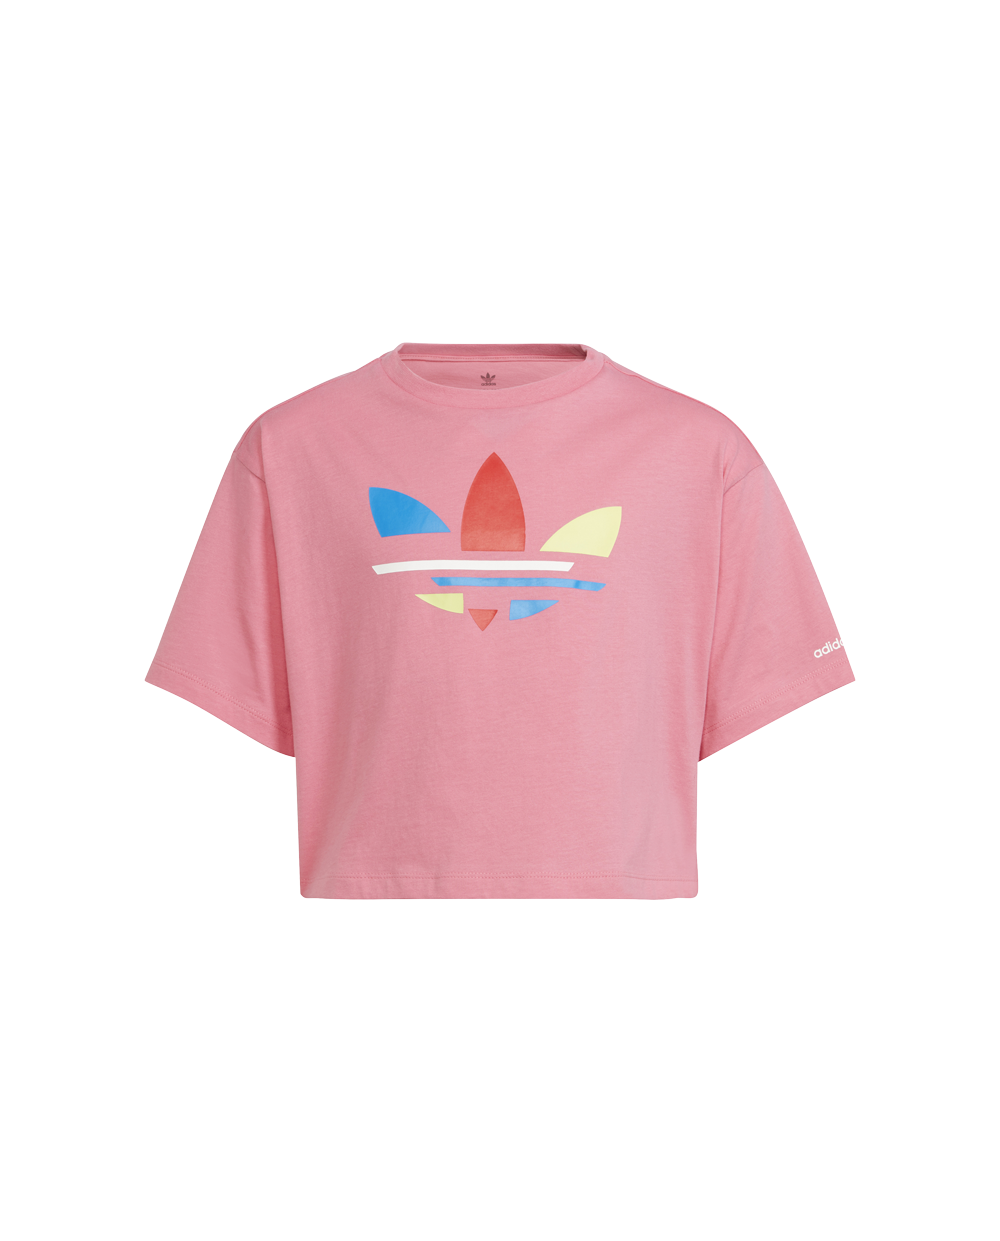 T-Shirt Adidas Rosa com Cores